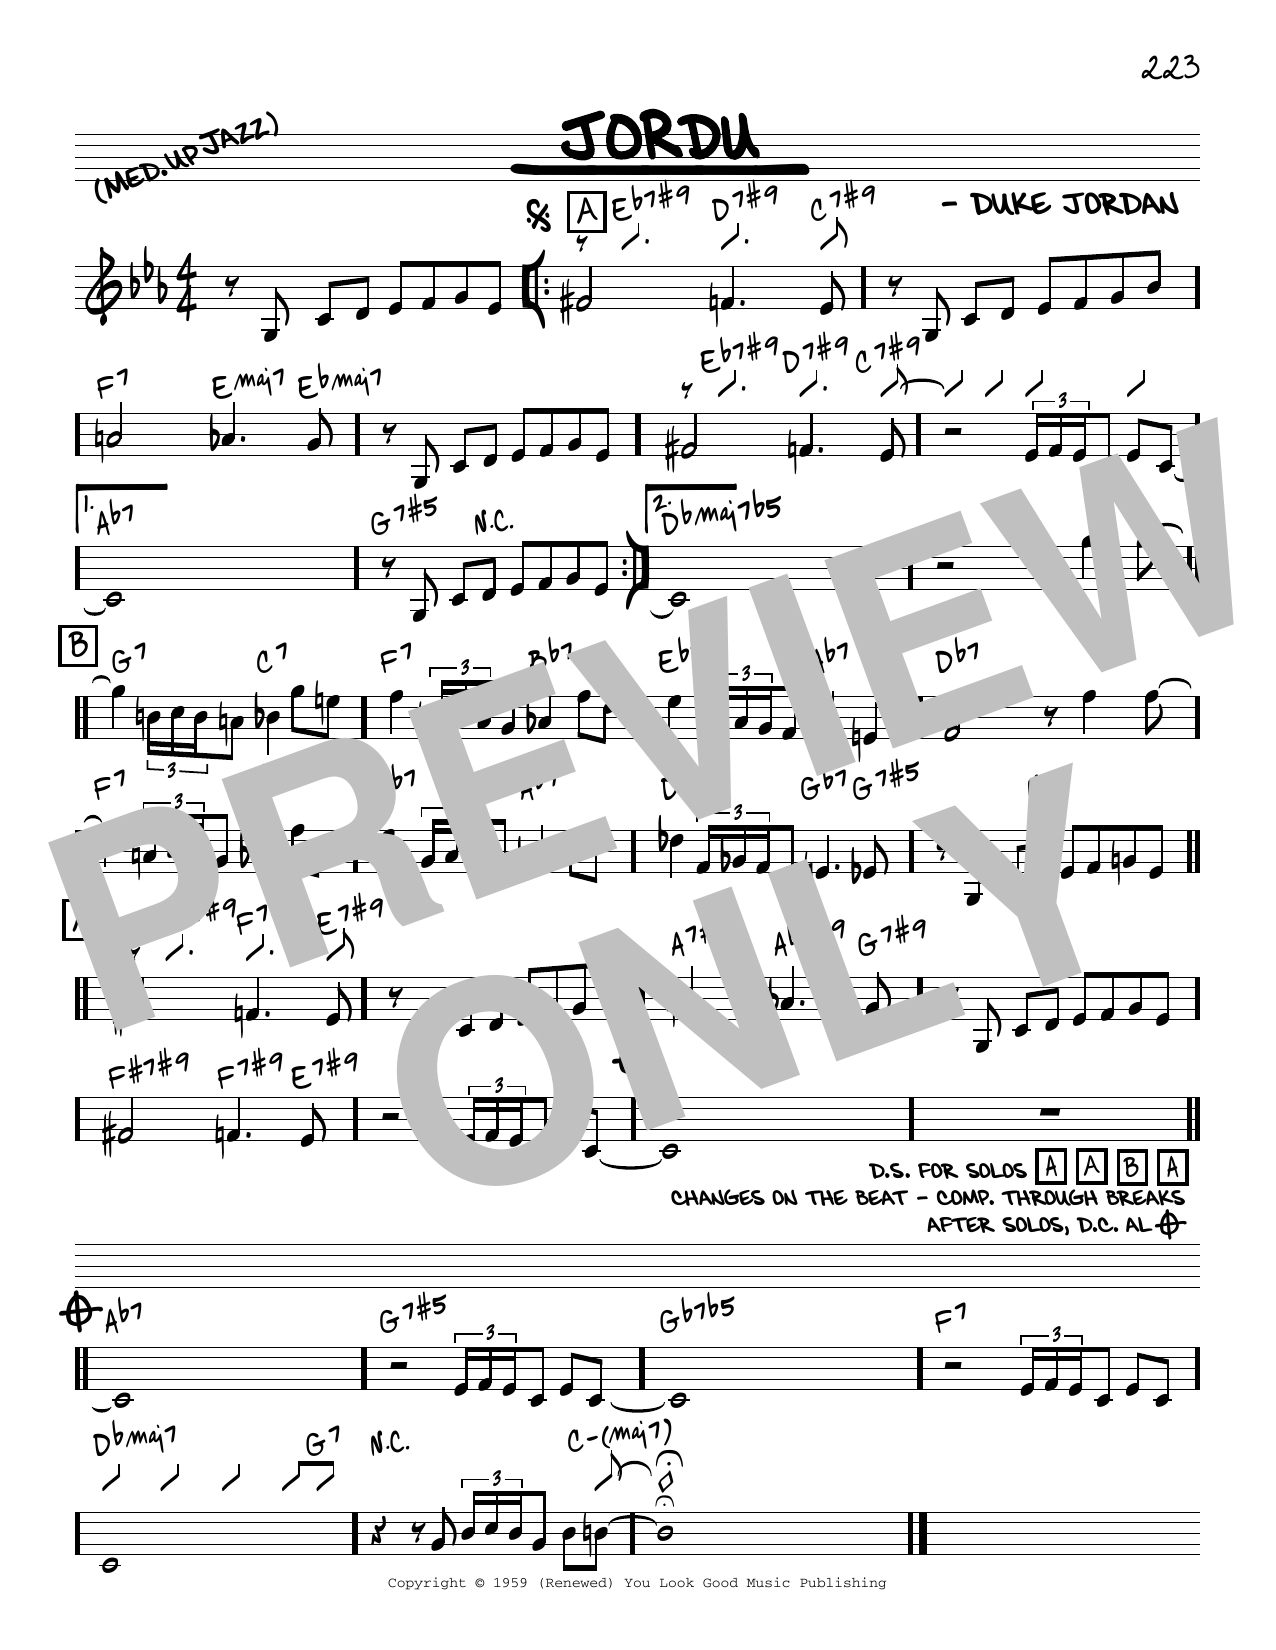 Duke Jordan Jordu [Reharmonized version] (arr. Jack Grassel) Sheet Music Notes & Chords for Real Book – Melody & Chords - Download or Print PDF